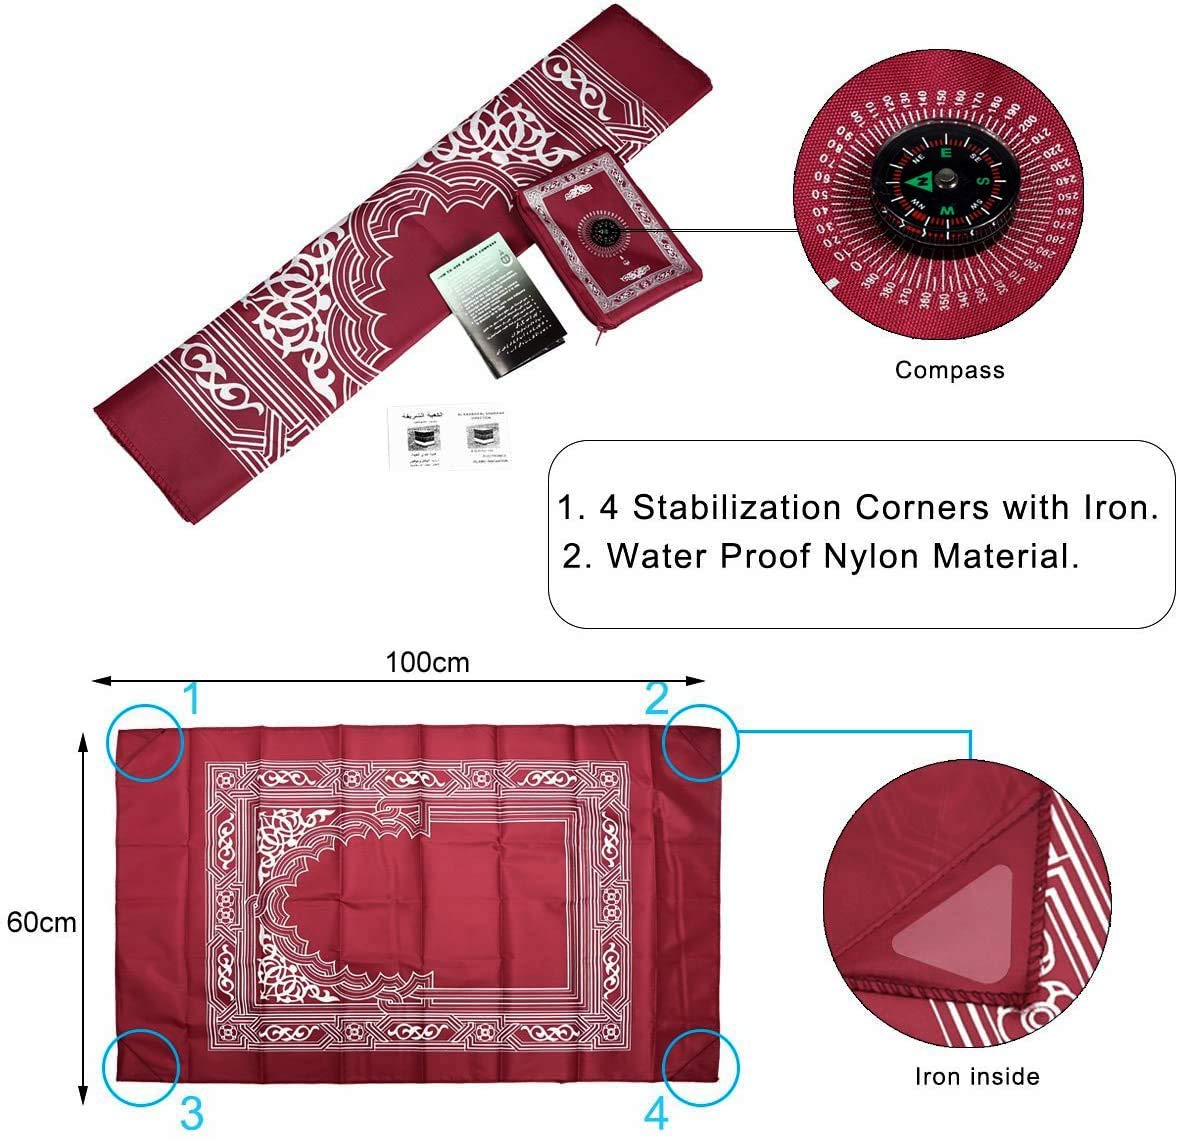 Islamic Muslim Rug Travel Prayer || Mat with compass Pocket Sized Carry Bag Cover 4x5inch ||Mat 60x100cm|| Gifts 123-Ramadan Gift|| Burgundy